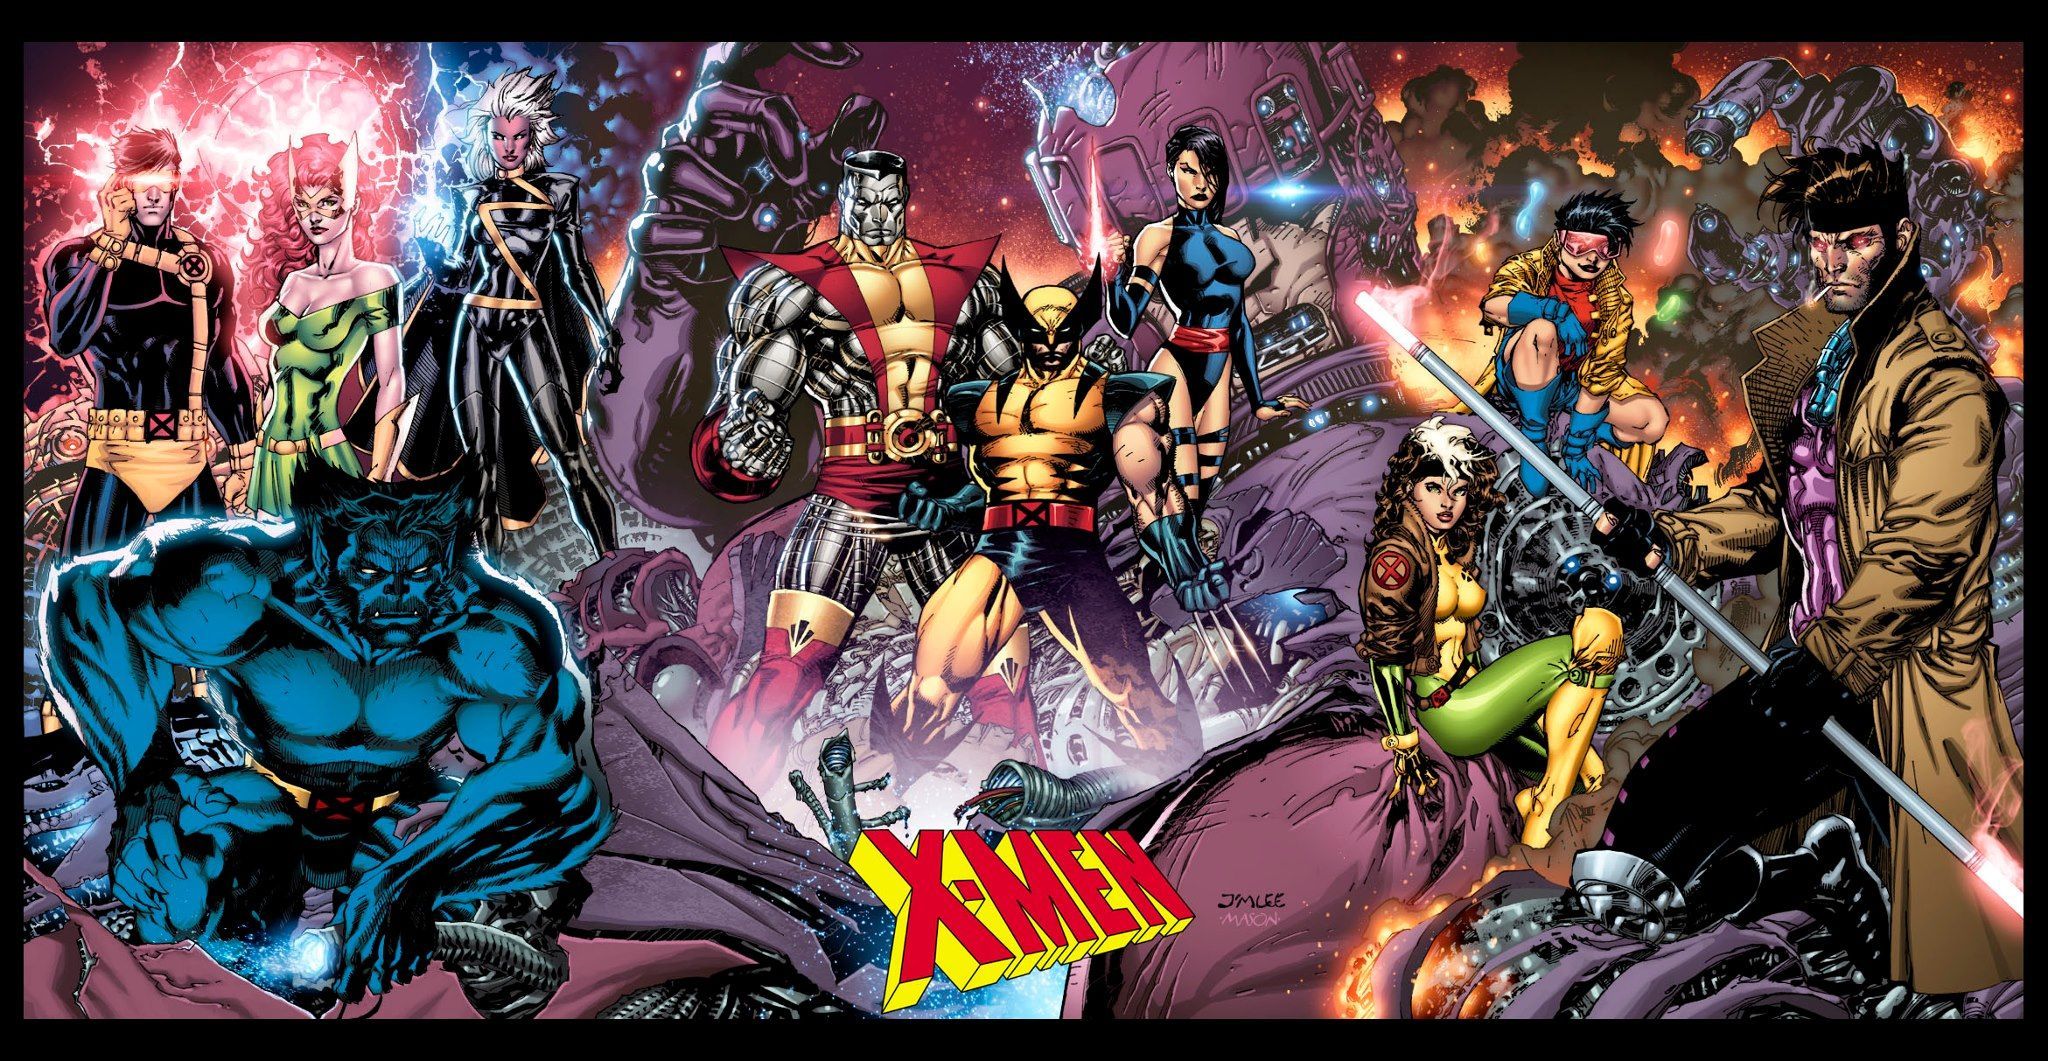 X Men Background Free Download. Wallpaper, Background, Image, Art Photo. Jim lee art, X men, Comics